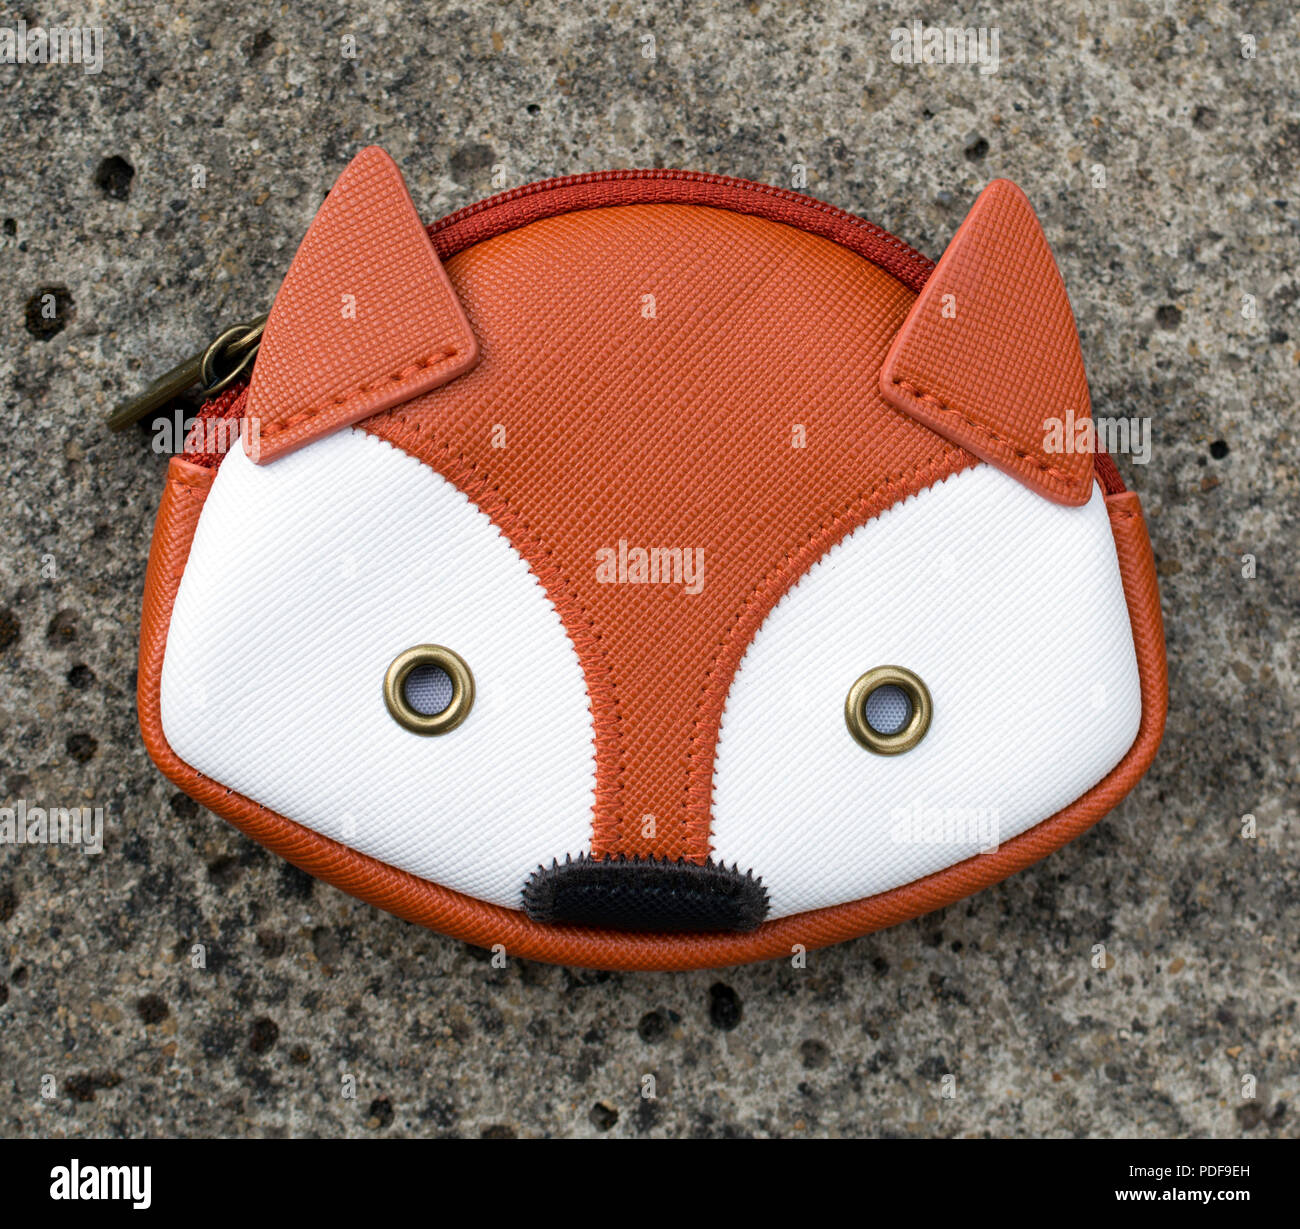 Cath Kidston fox face purse Stock Photo 